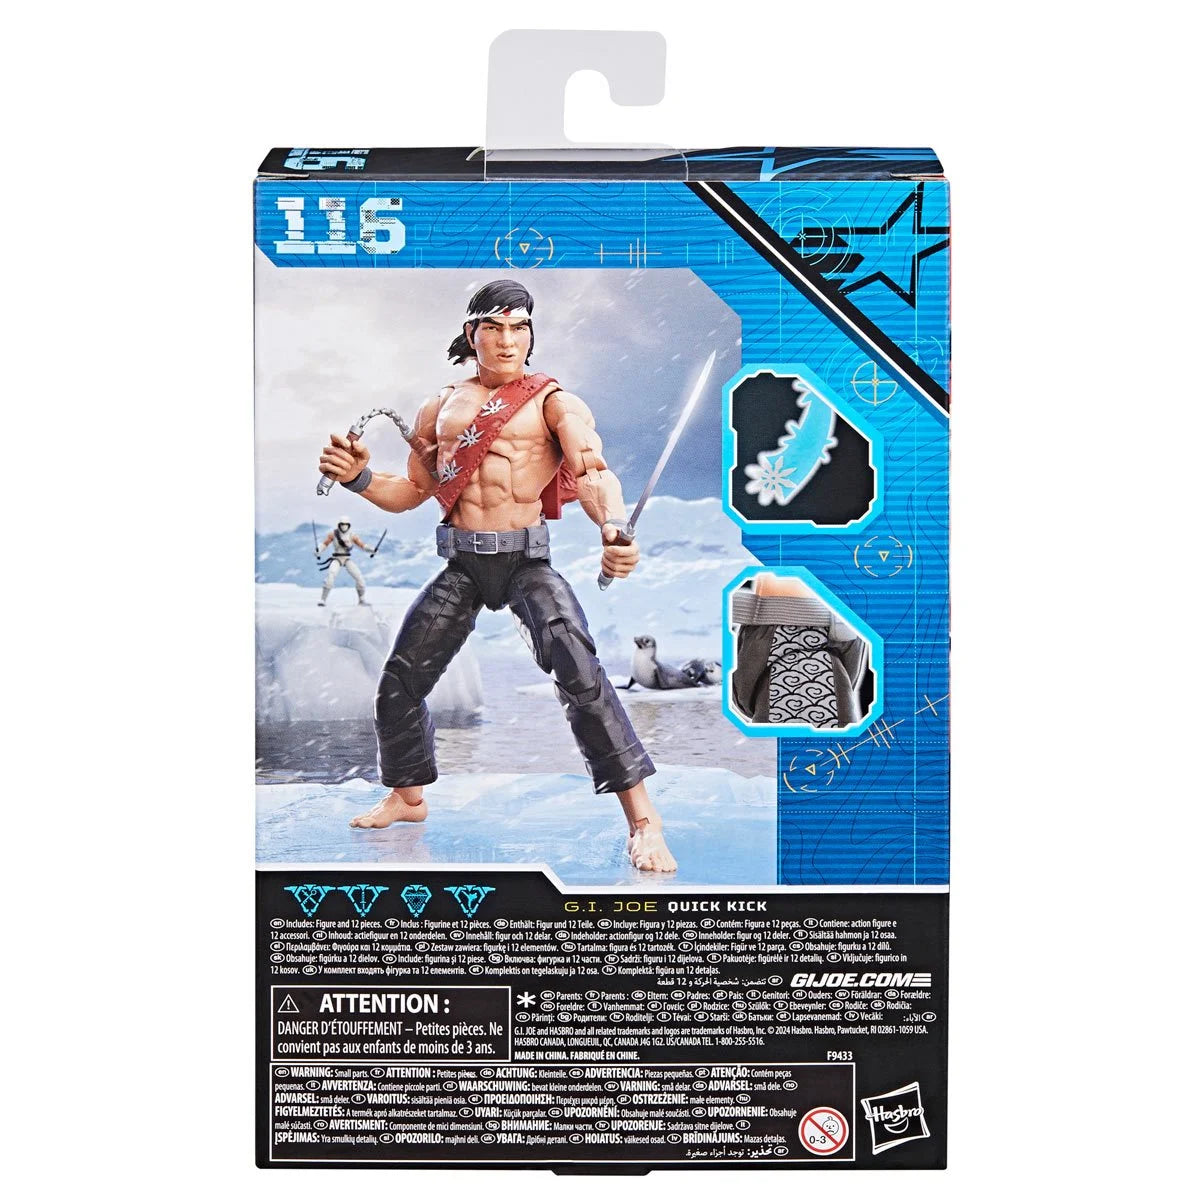 G.I. Joe Classified Series #116, Quick Kick Action Figure Toy